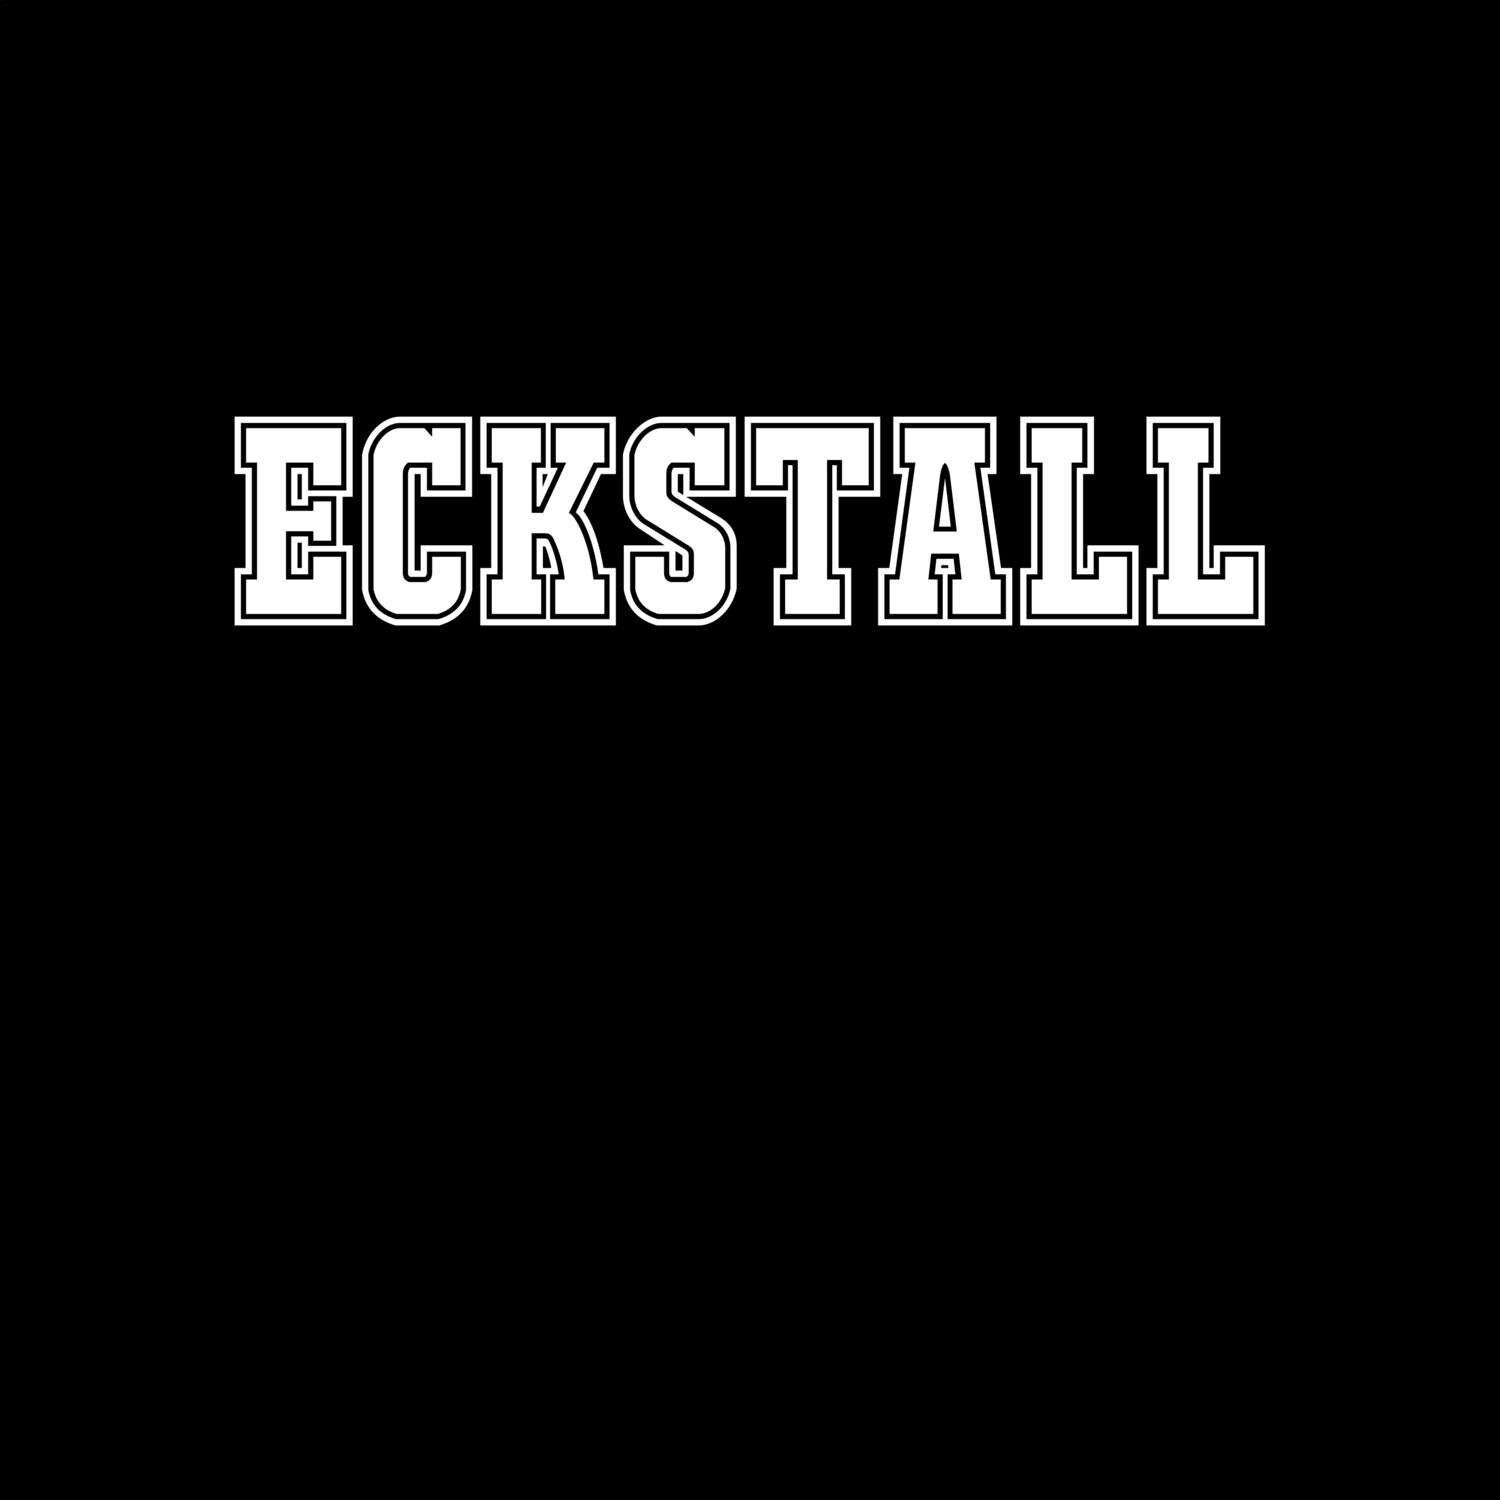 Eckstall T-Shirt »Classic«